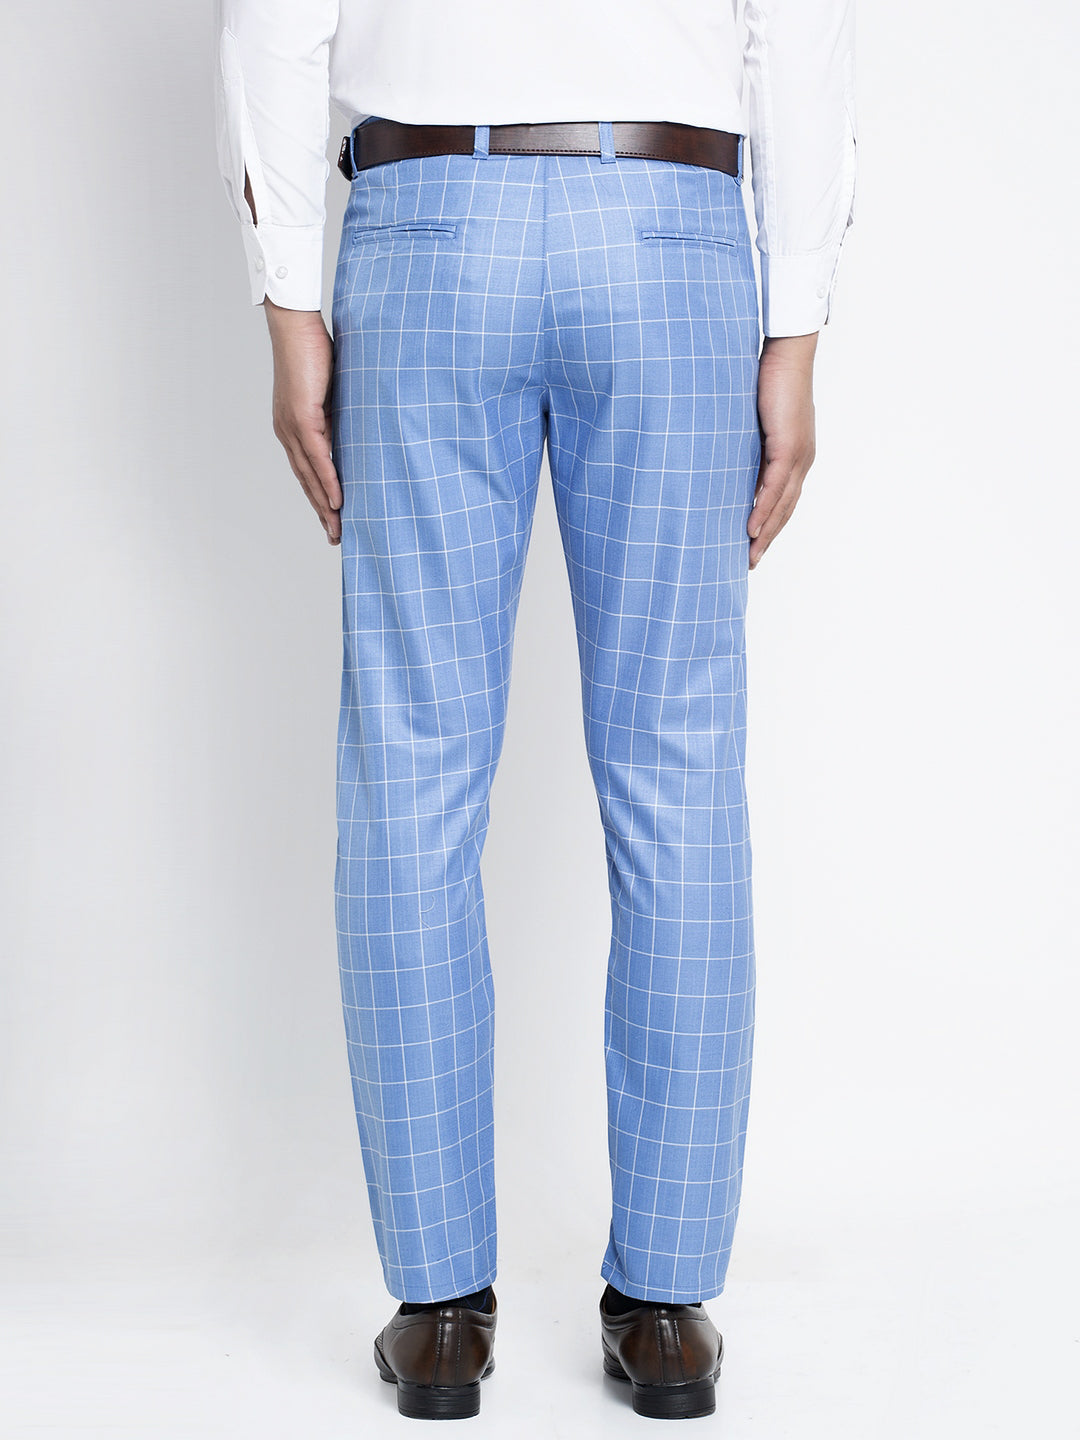 Medium Blue Check Trousers - Selling Fast at Pantaloons.com